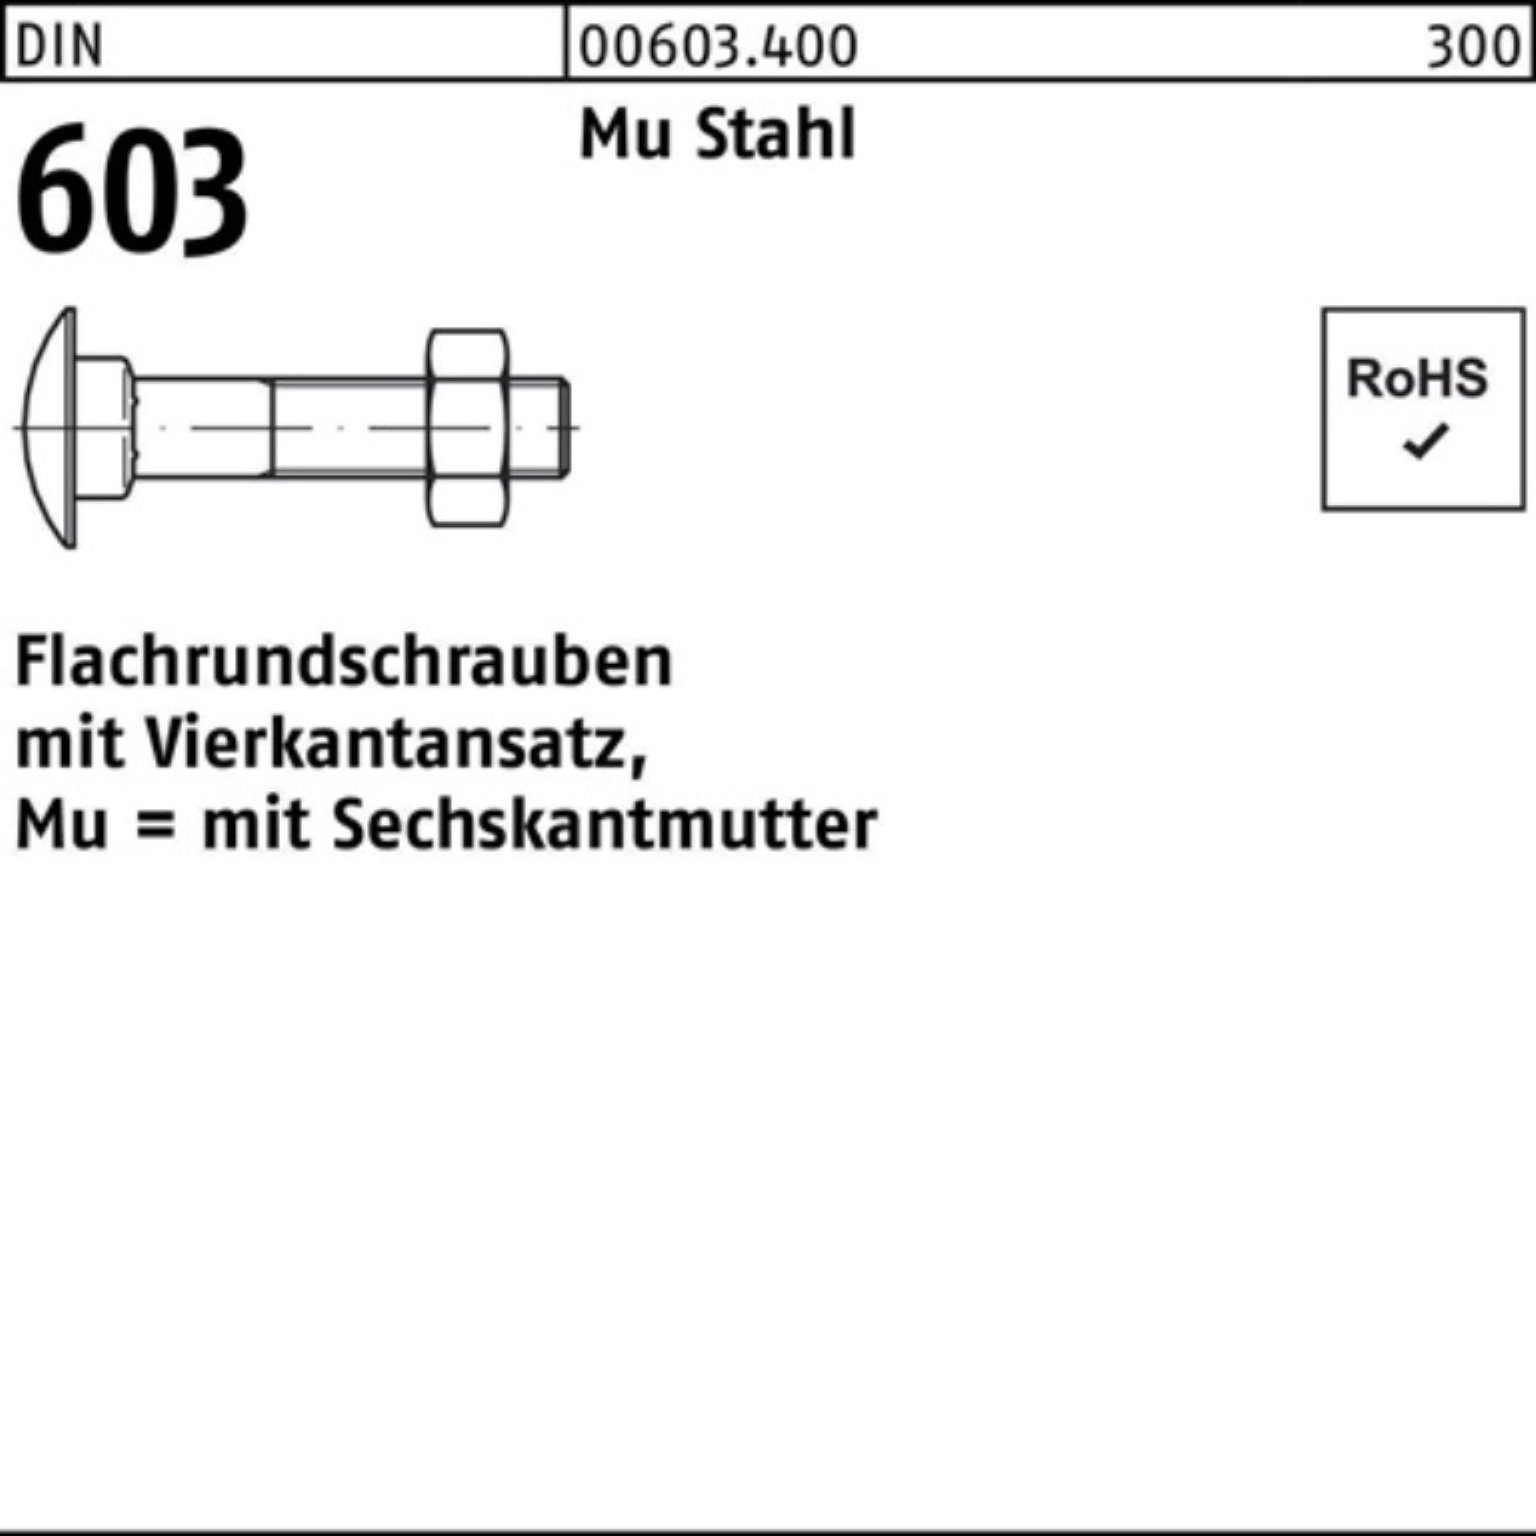 Reyher Schraube 100er Flachrundschraube Vierkantansatz/6-ktmutter 603 DIN Pack M8x140